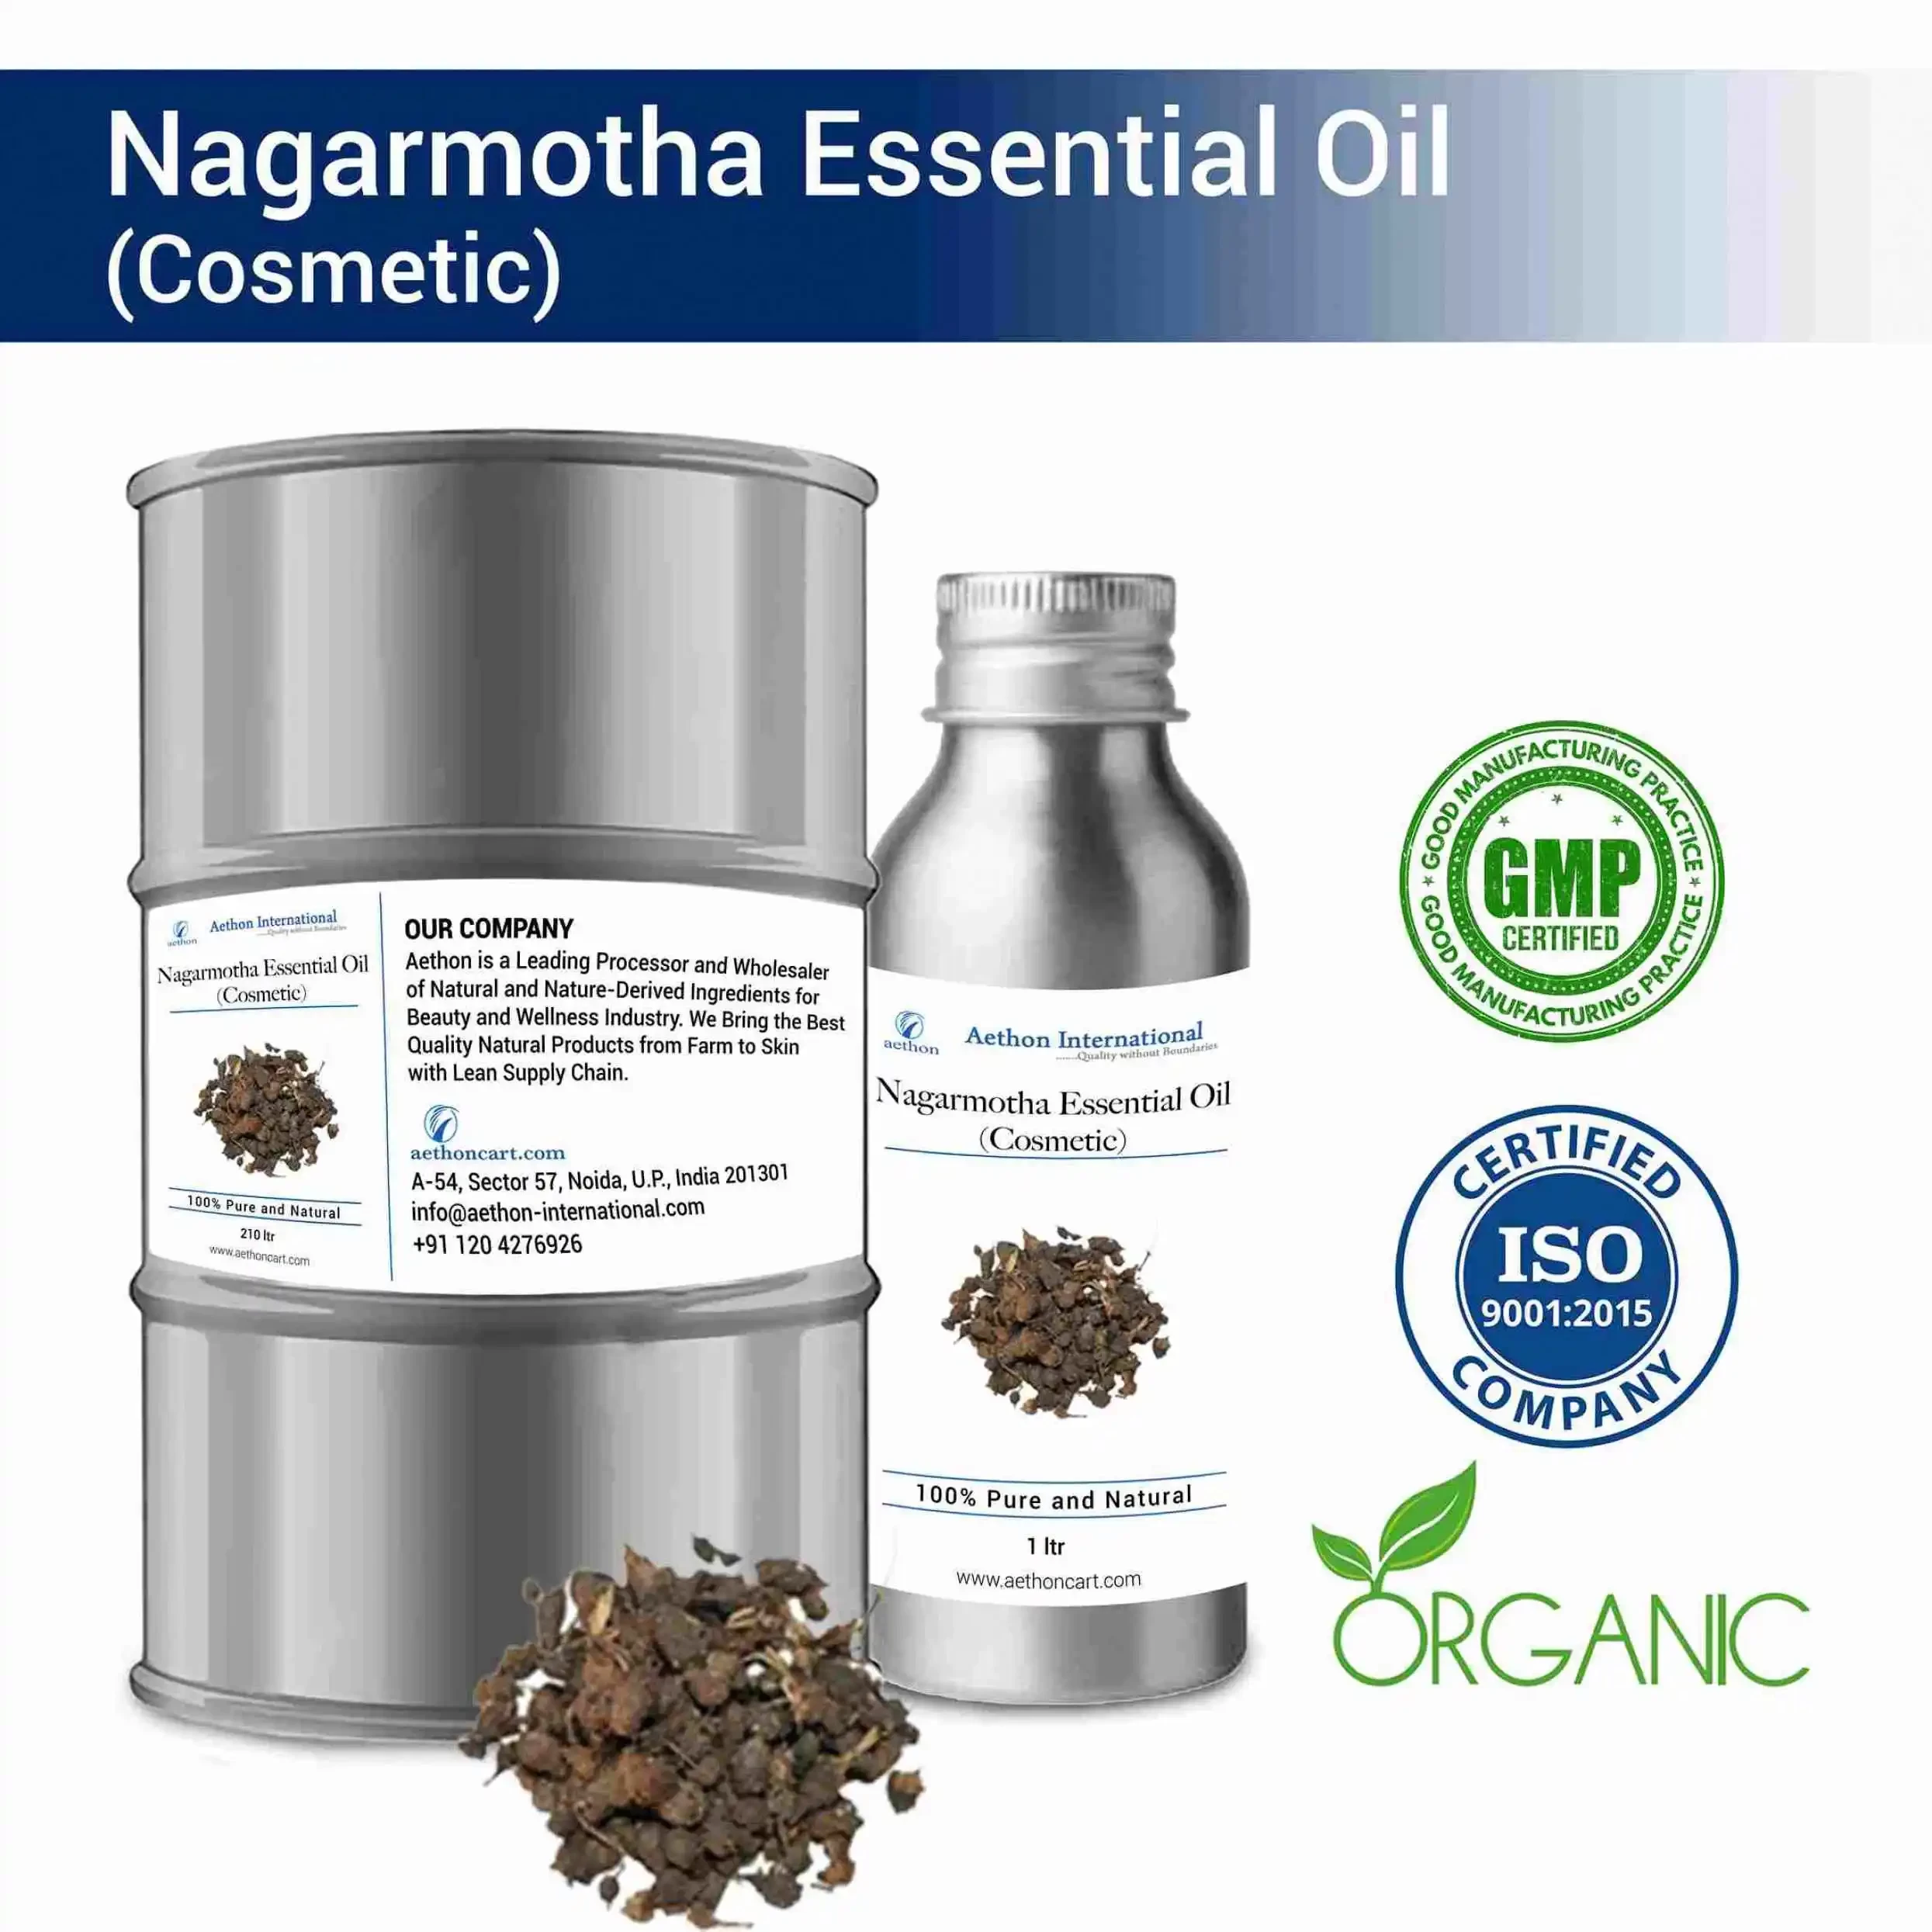 Nagarmotha Essential Oil (Cosmetic)